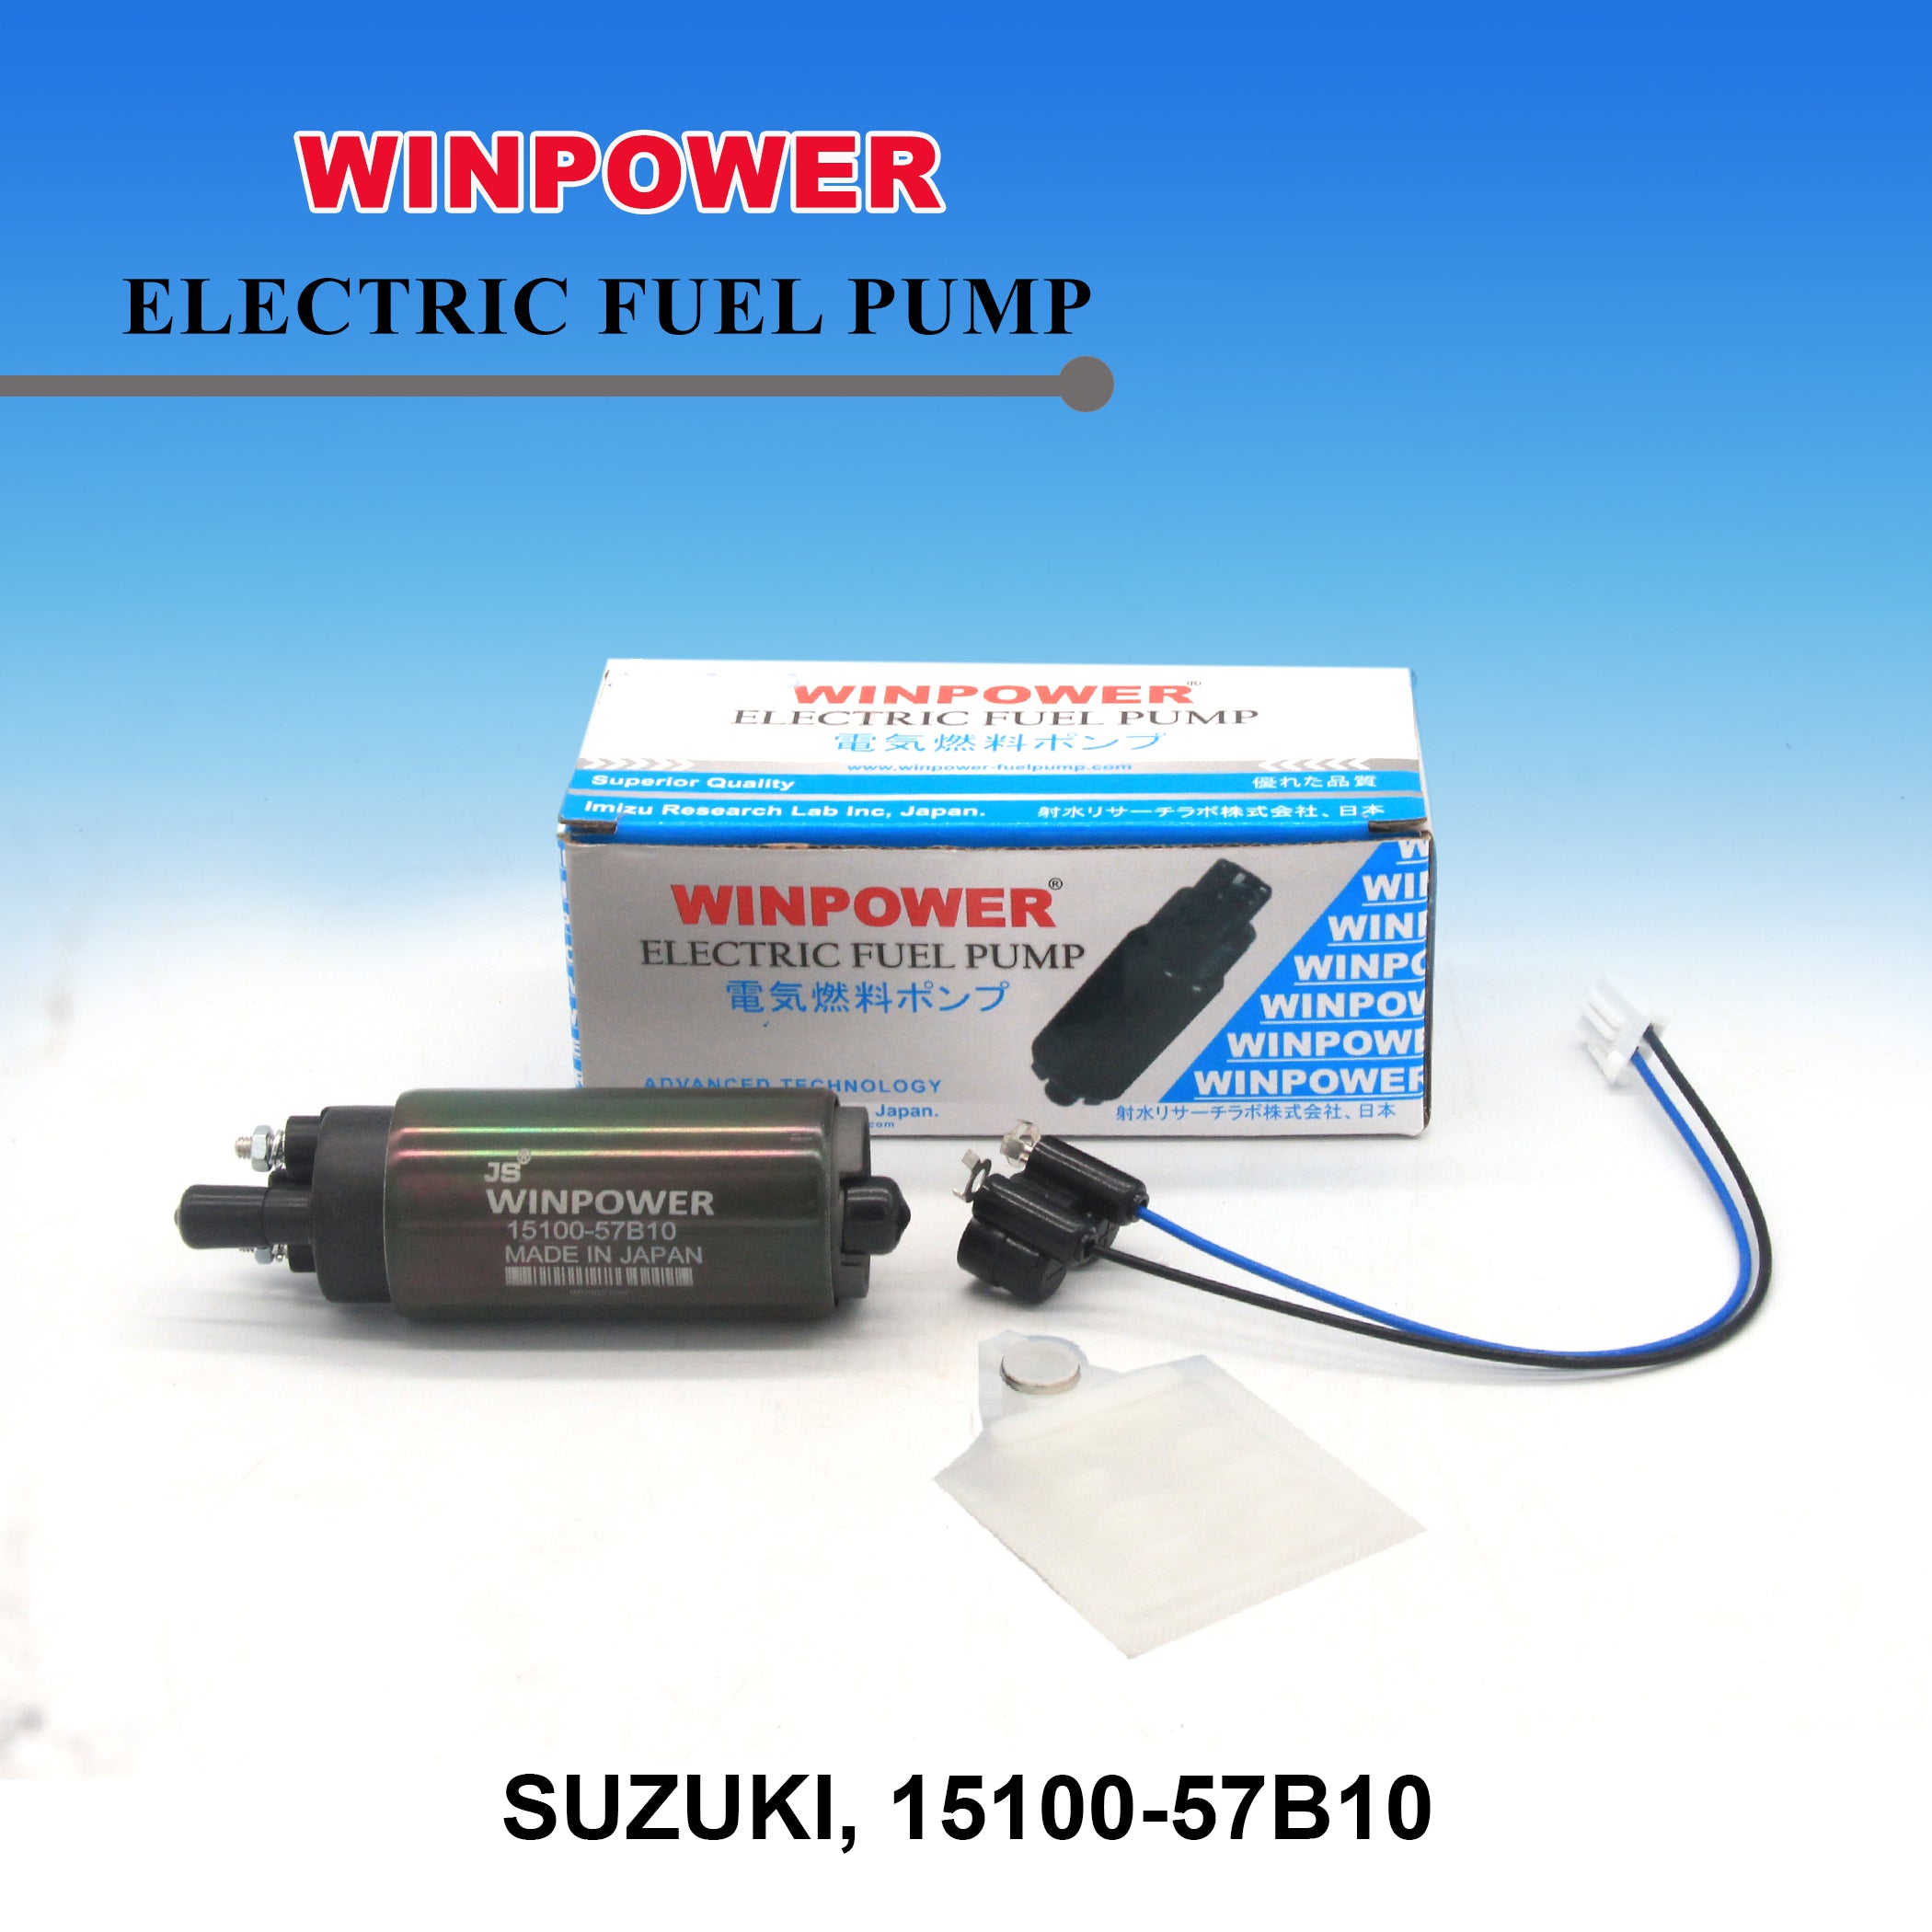 In-Tank Fuel Pump, WINPOWER, 15100-57B10, WF-3804 (005069)